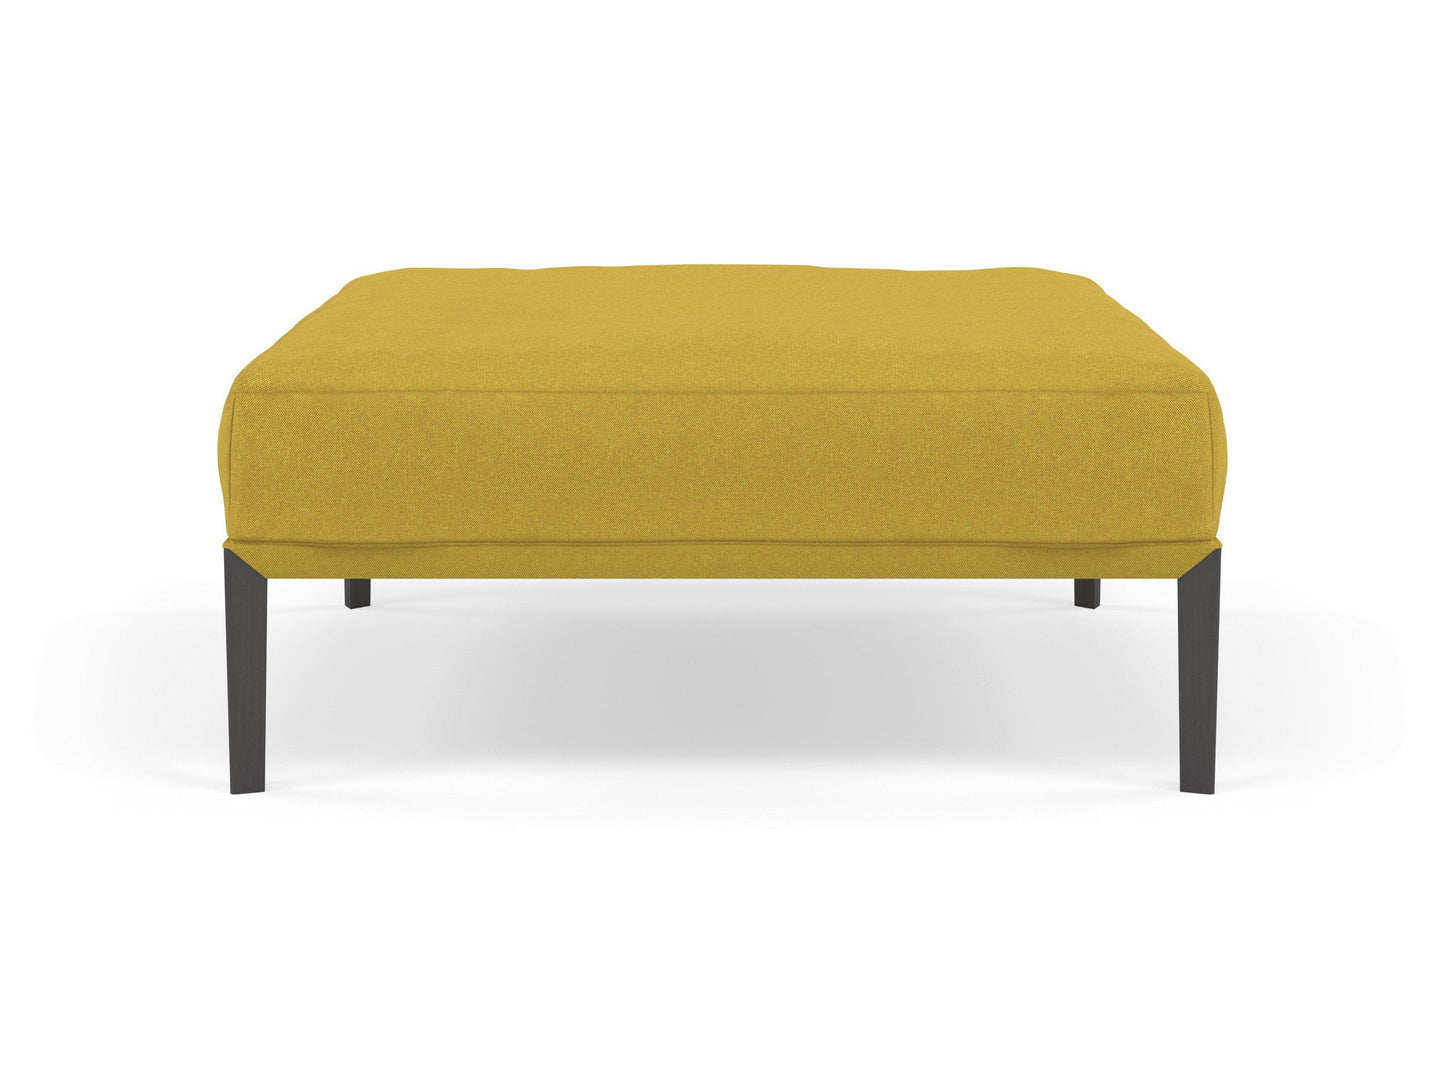 Modern Pouffe Footstools Ottomans Square Seat 103x103cm in Vibrant Mustard Yellow Fabric-Distinct Designs (London) Ltd